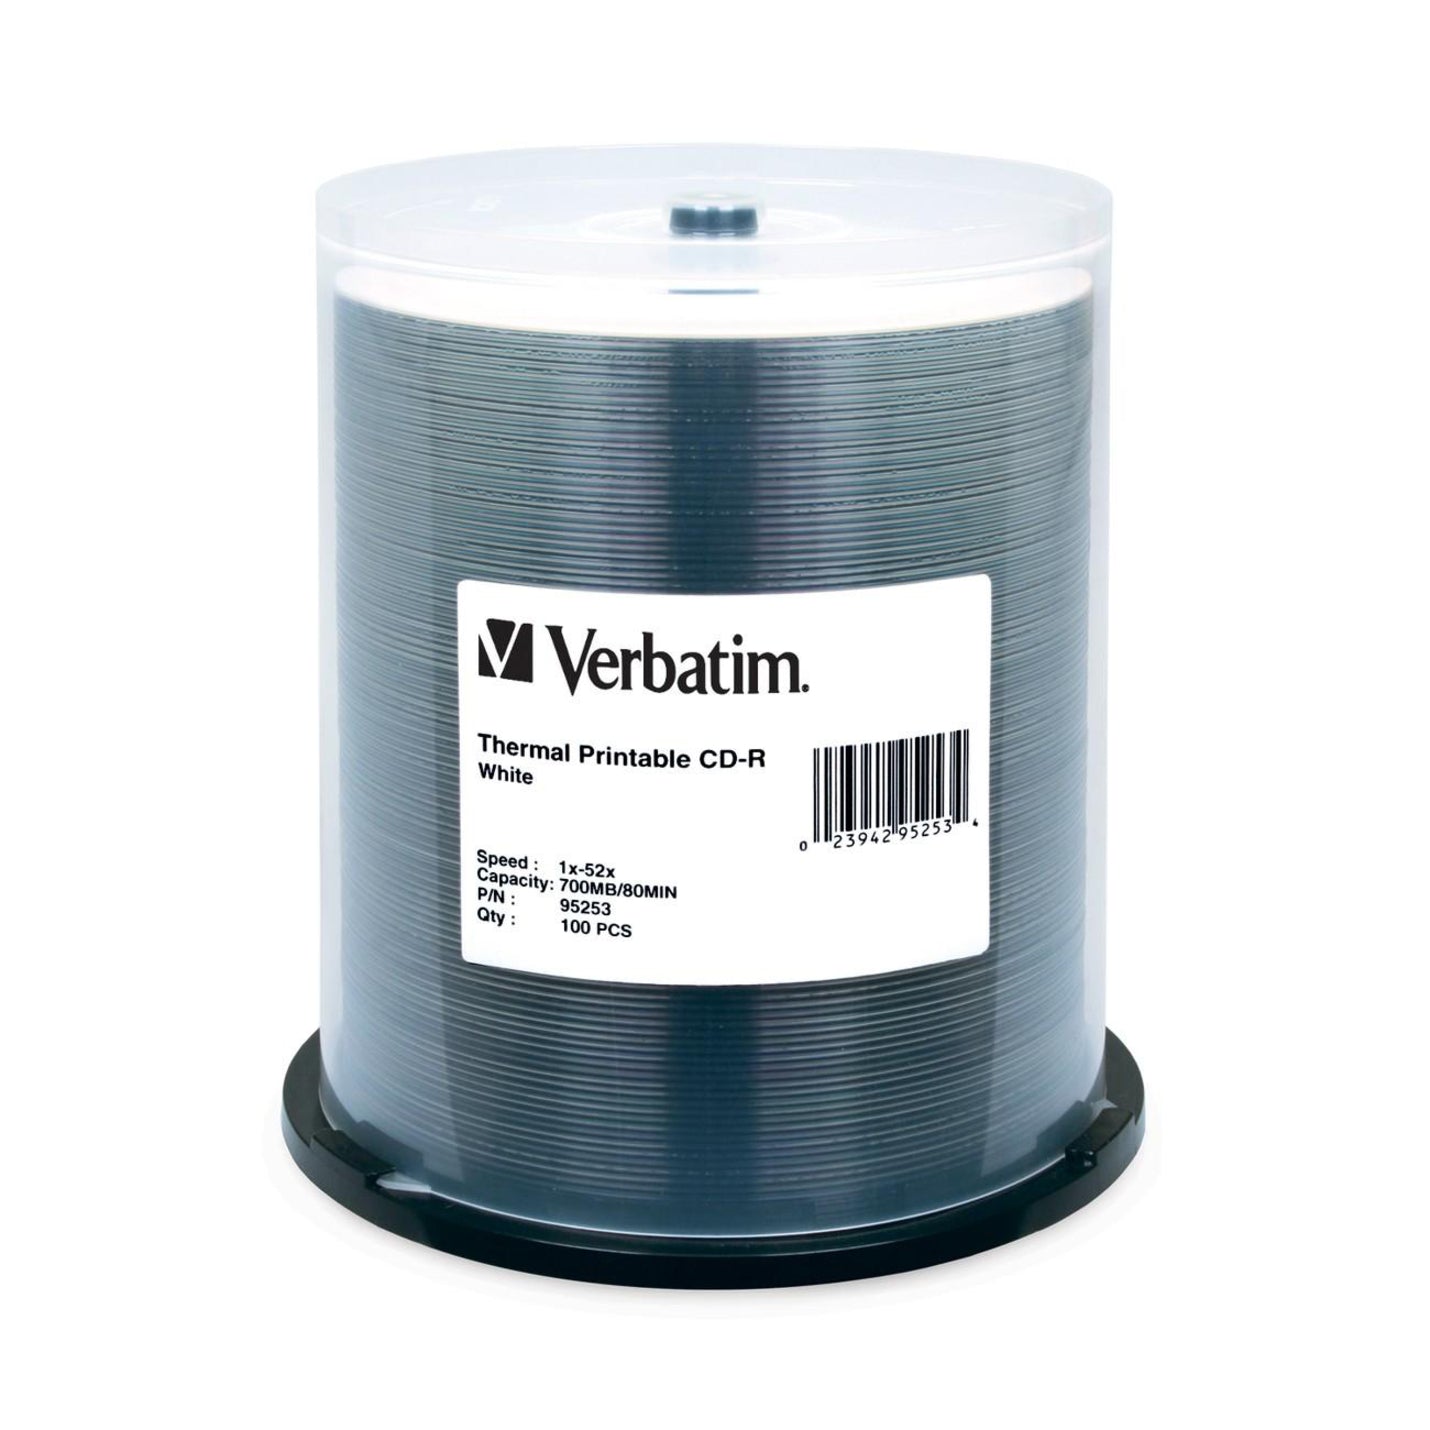 Verbatim 95253 CD-R 700MB 52X White Thermal Printable - 100pk Spindle, Lifetime Warranty